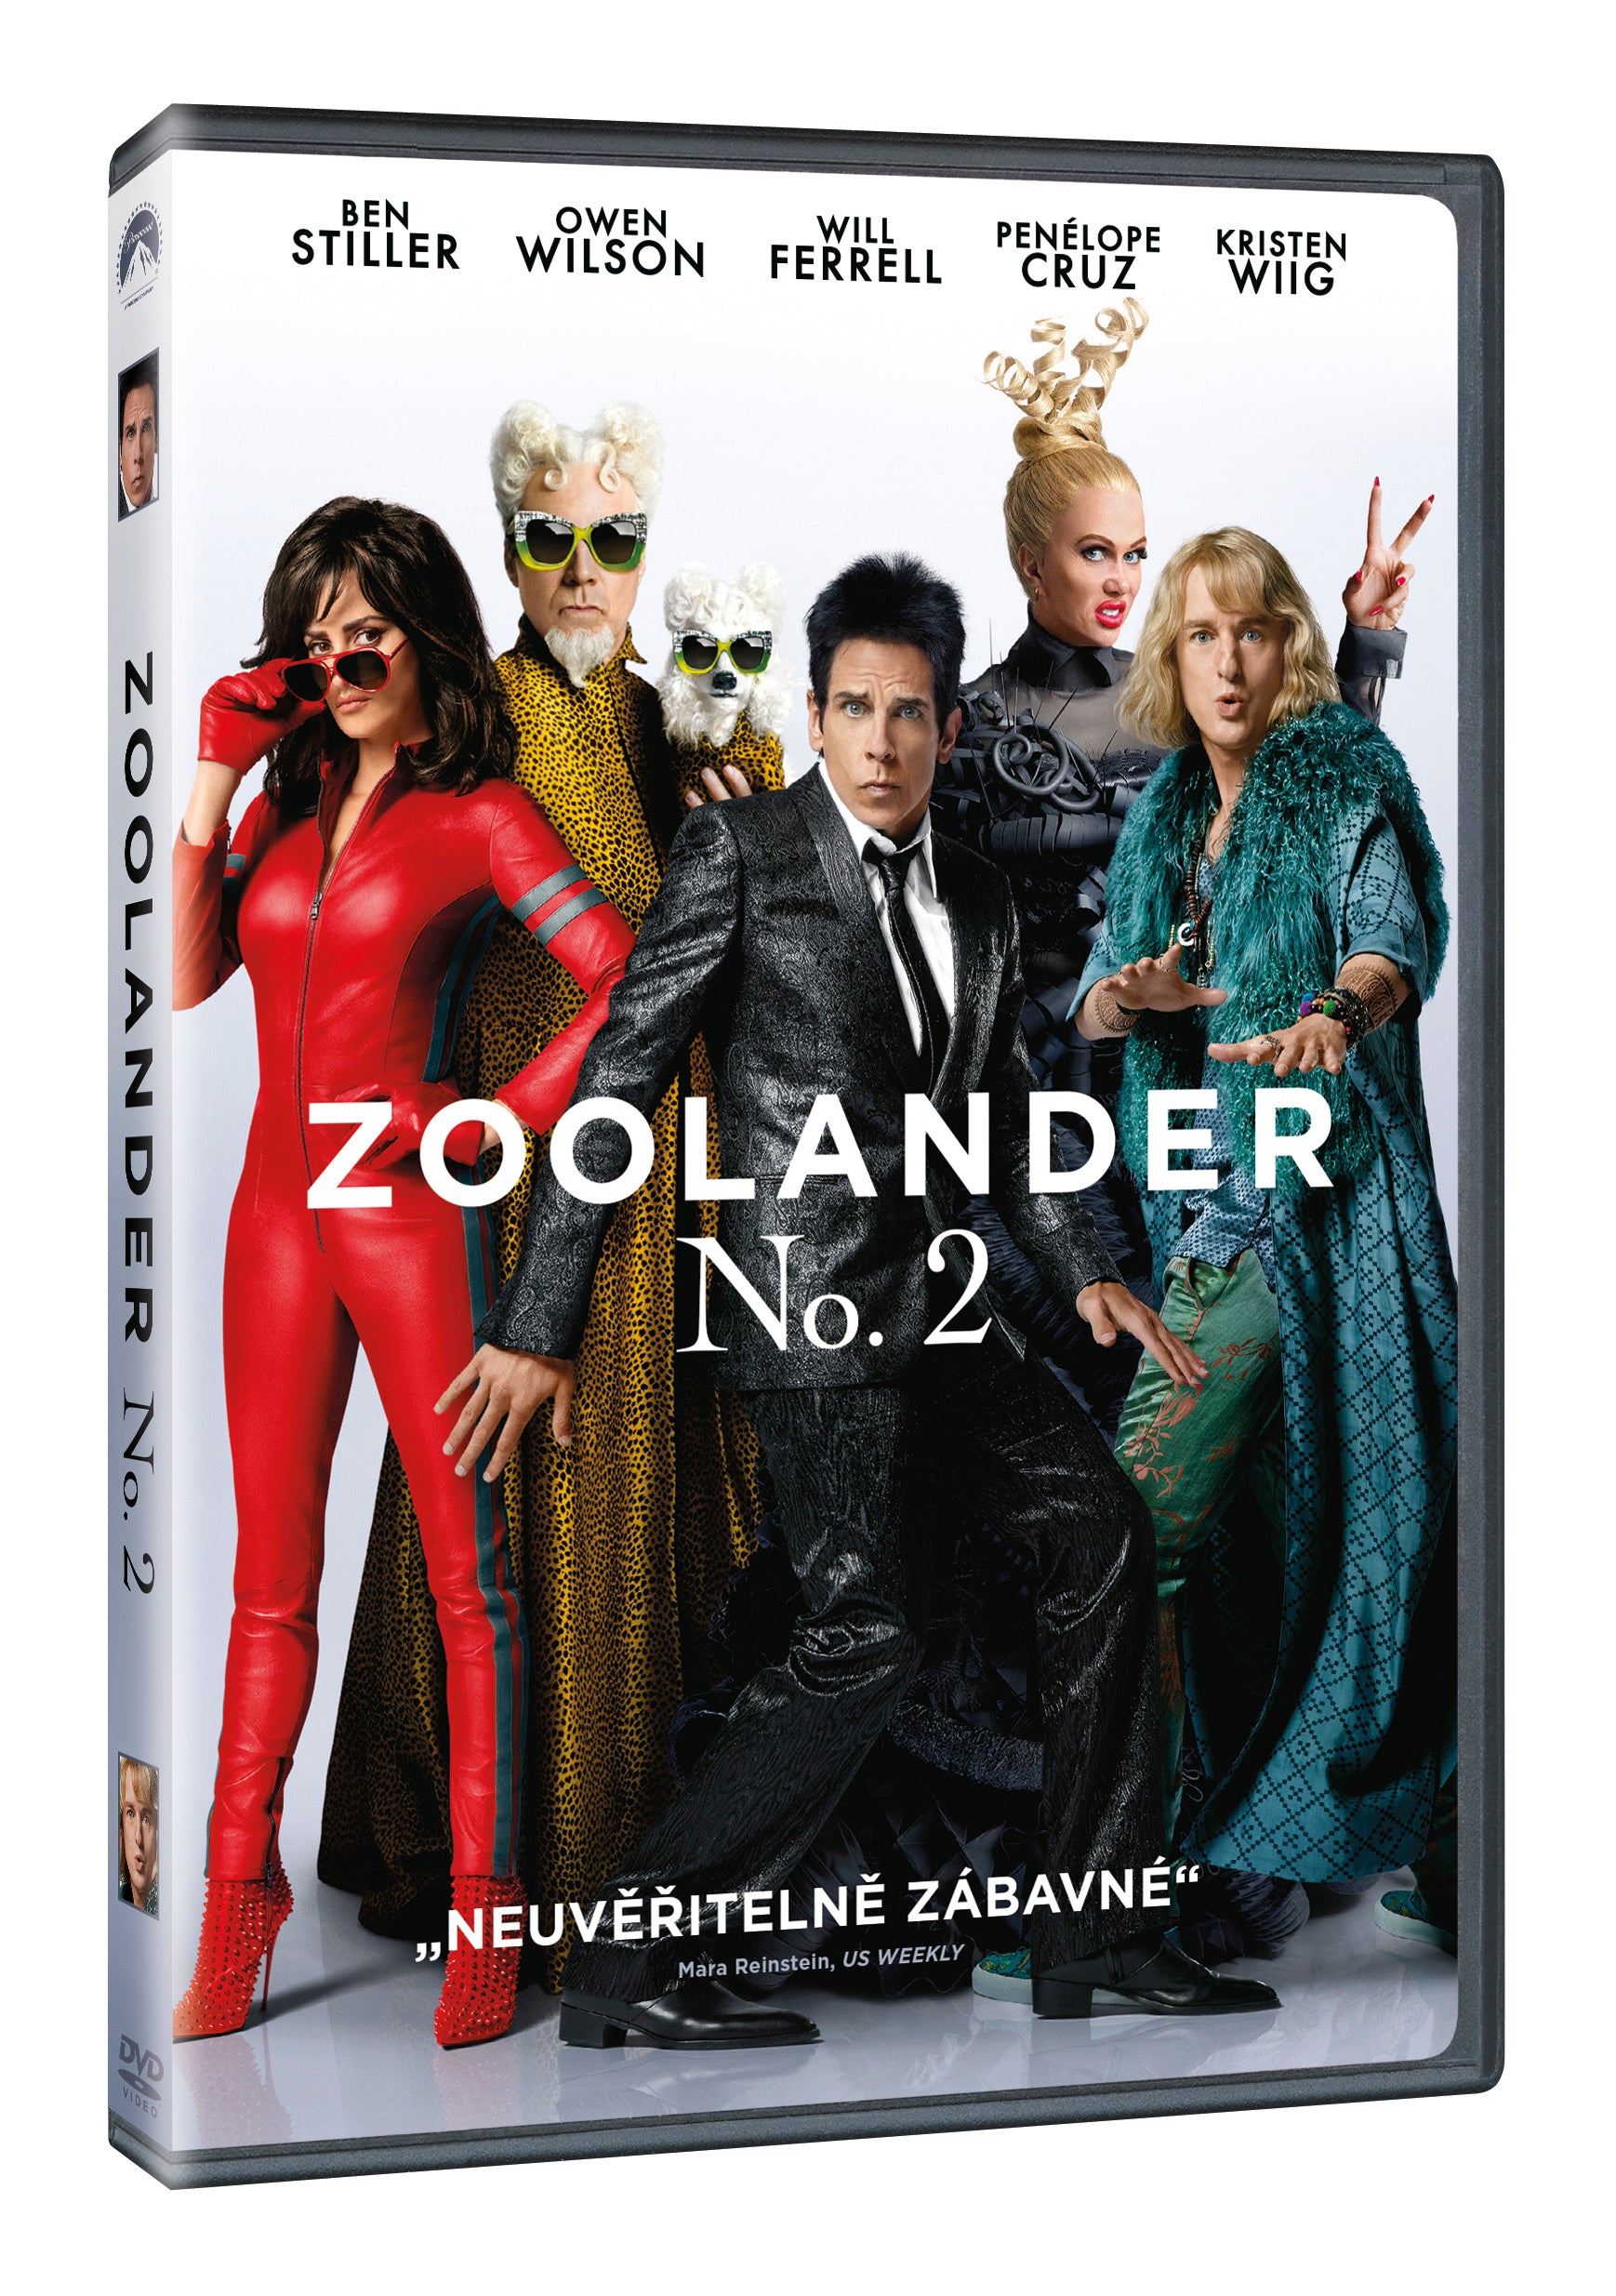 Zoolander Nr. 2. DVD / Zoolander Nr. 2.